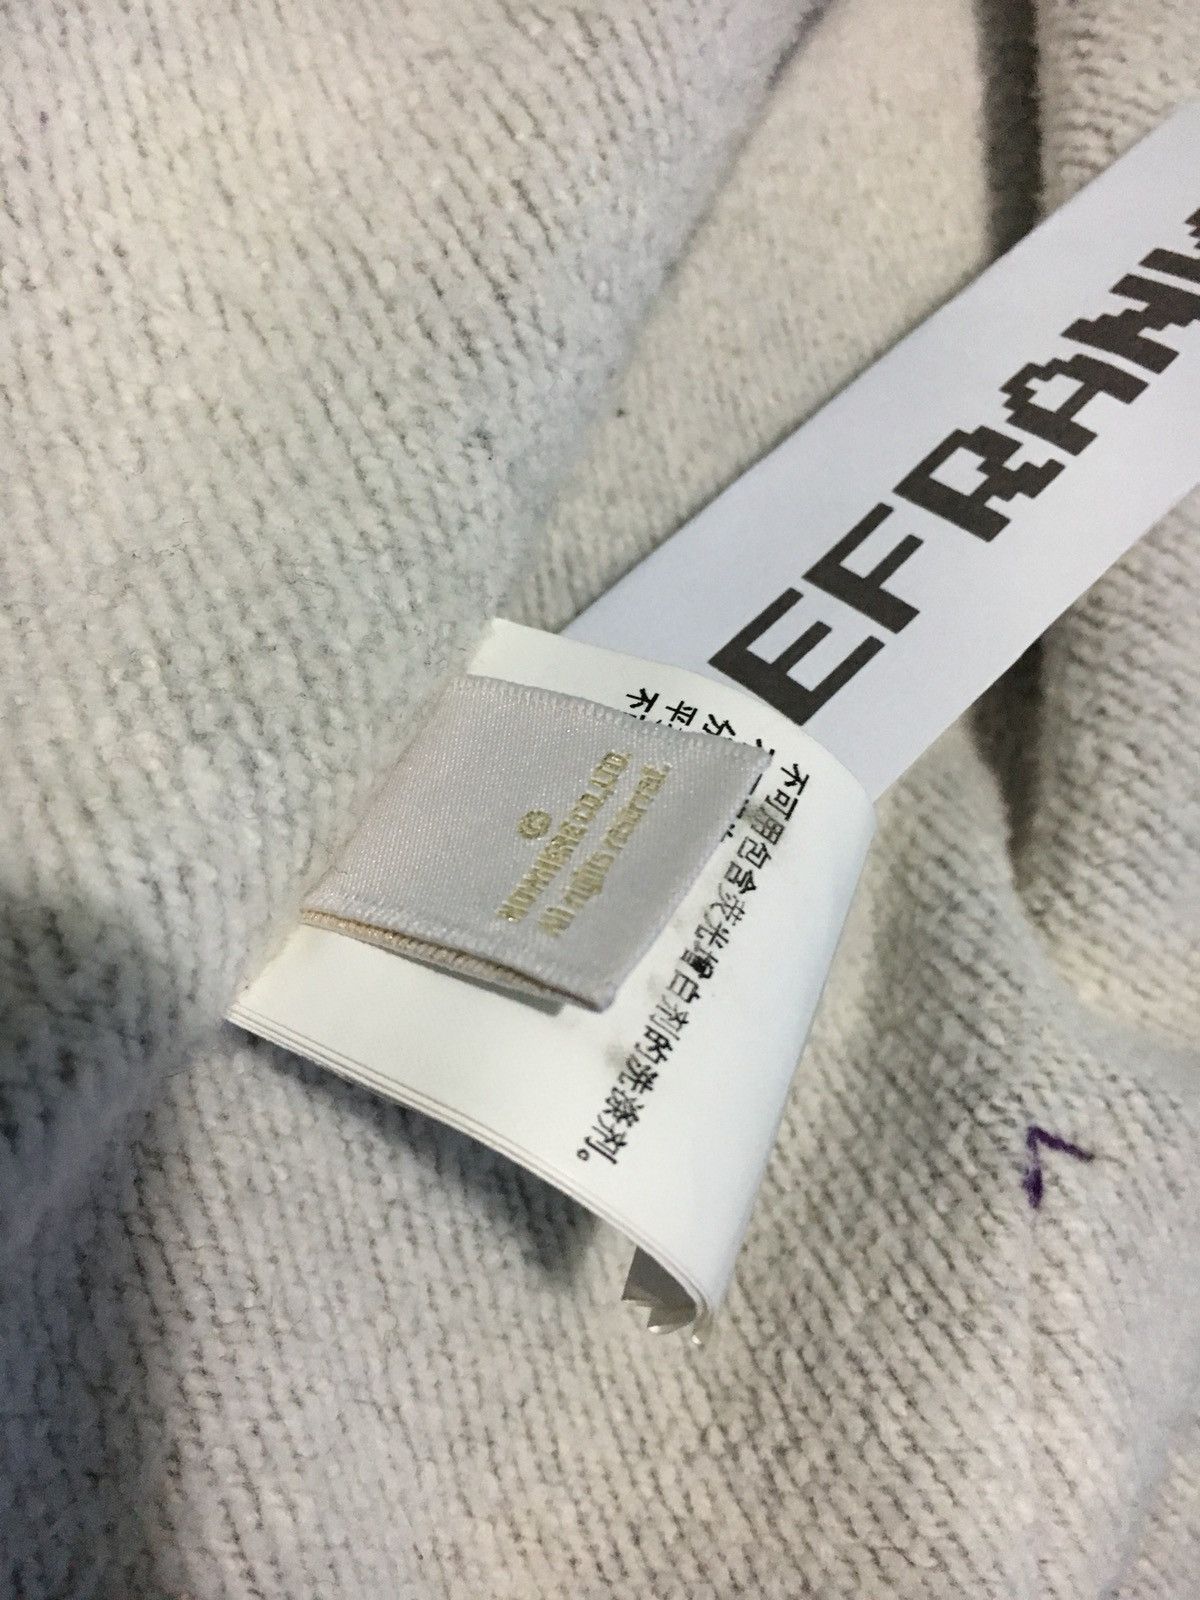 Bape Zip-Up WGM Bape Hoodie Size US M / EU 48-50 / 2 - 12 Preview